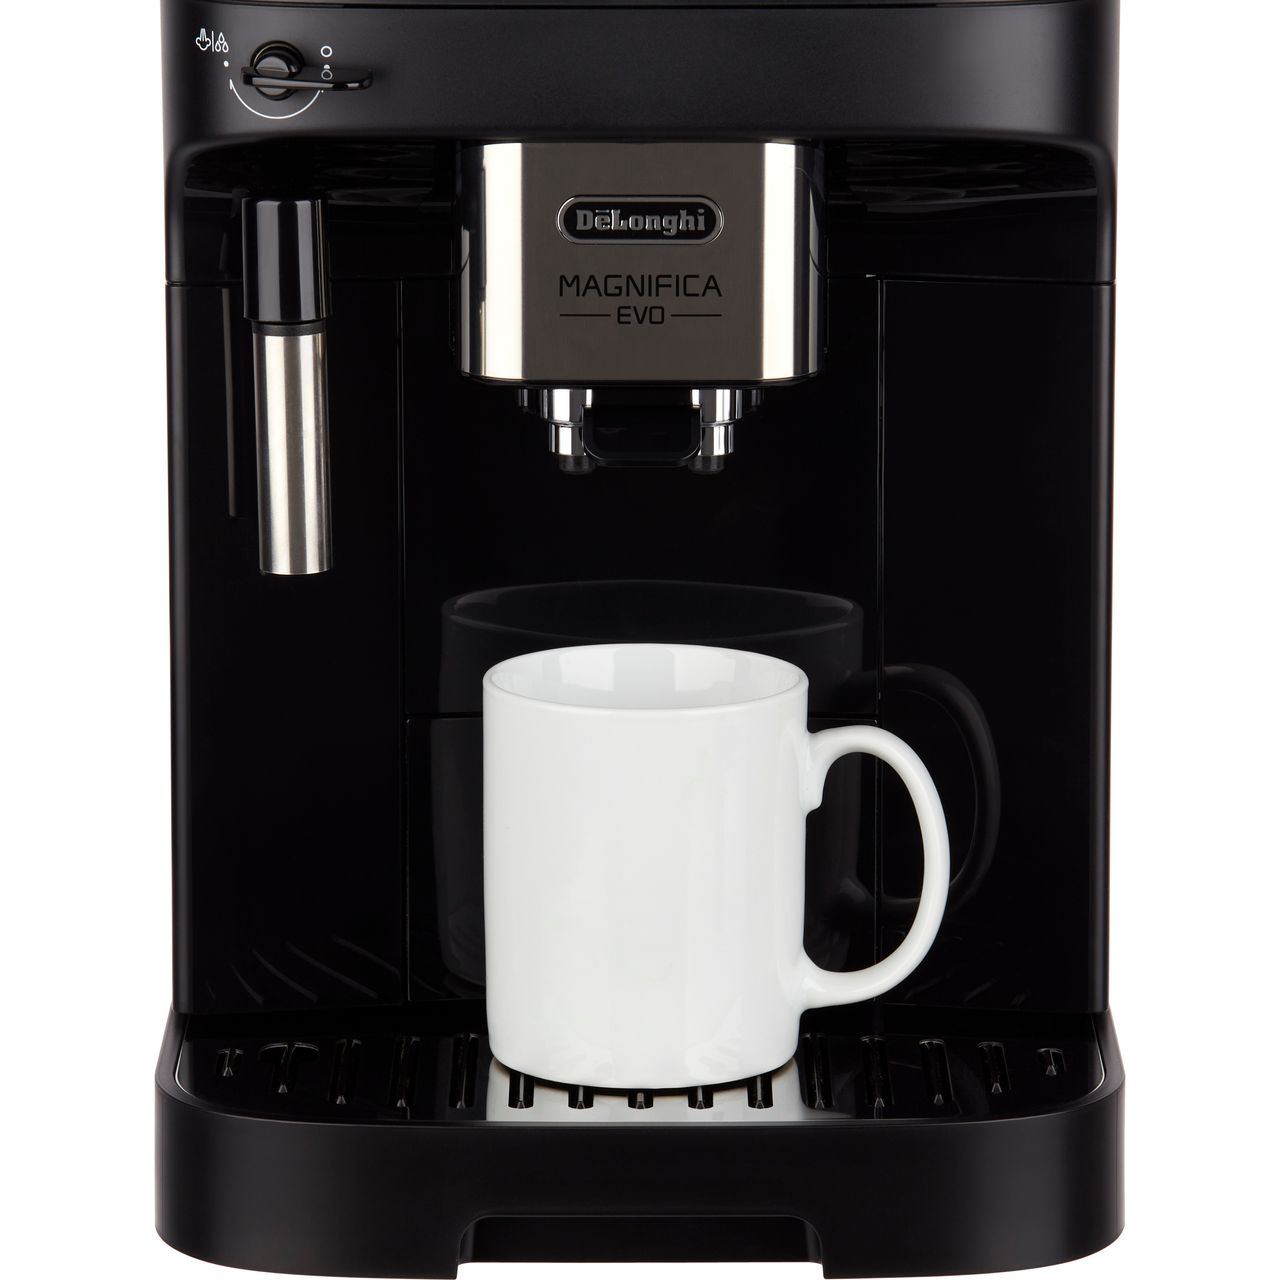 DeLonghi Magnifica Evo ECAM290.61.B Bean to Cup Coffee Machine - Black -  Coffee Friend